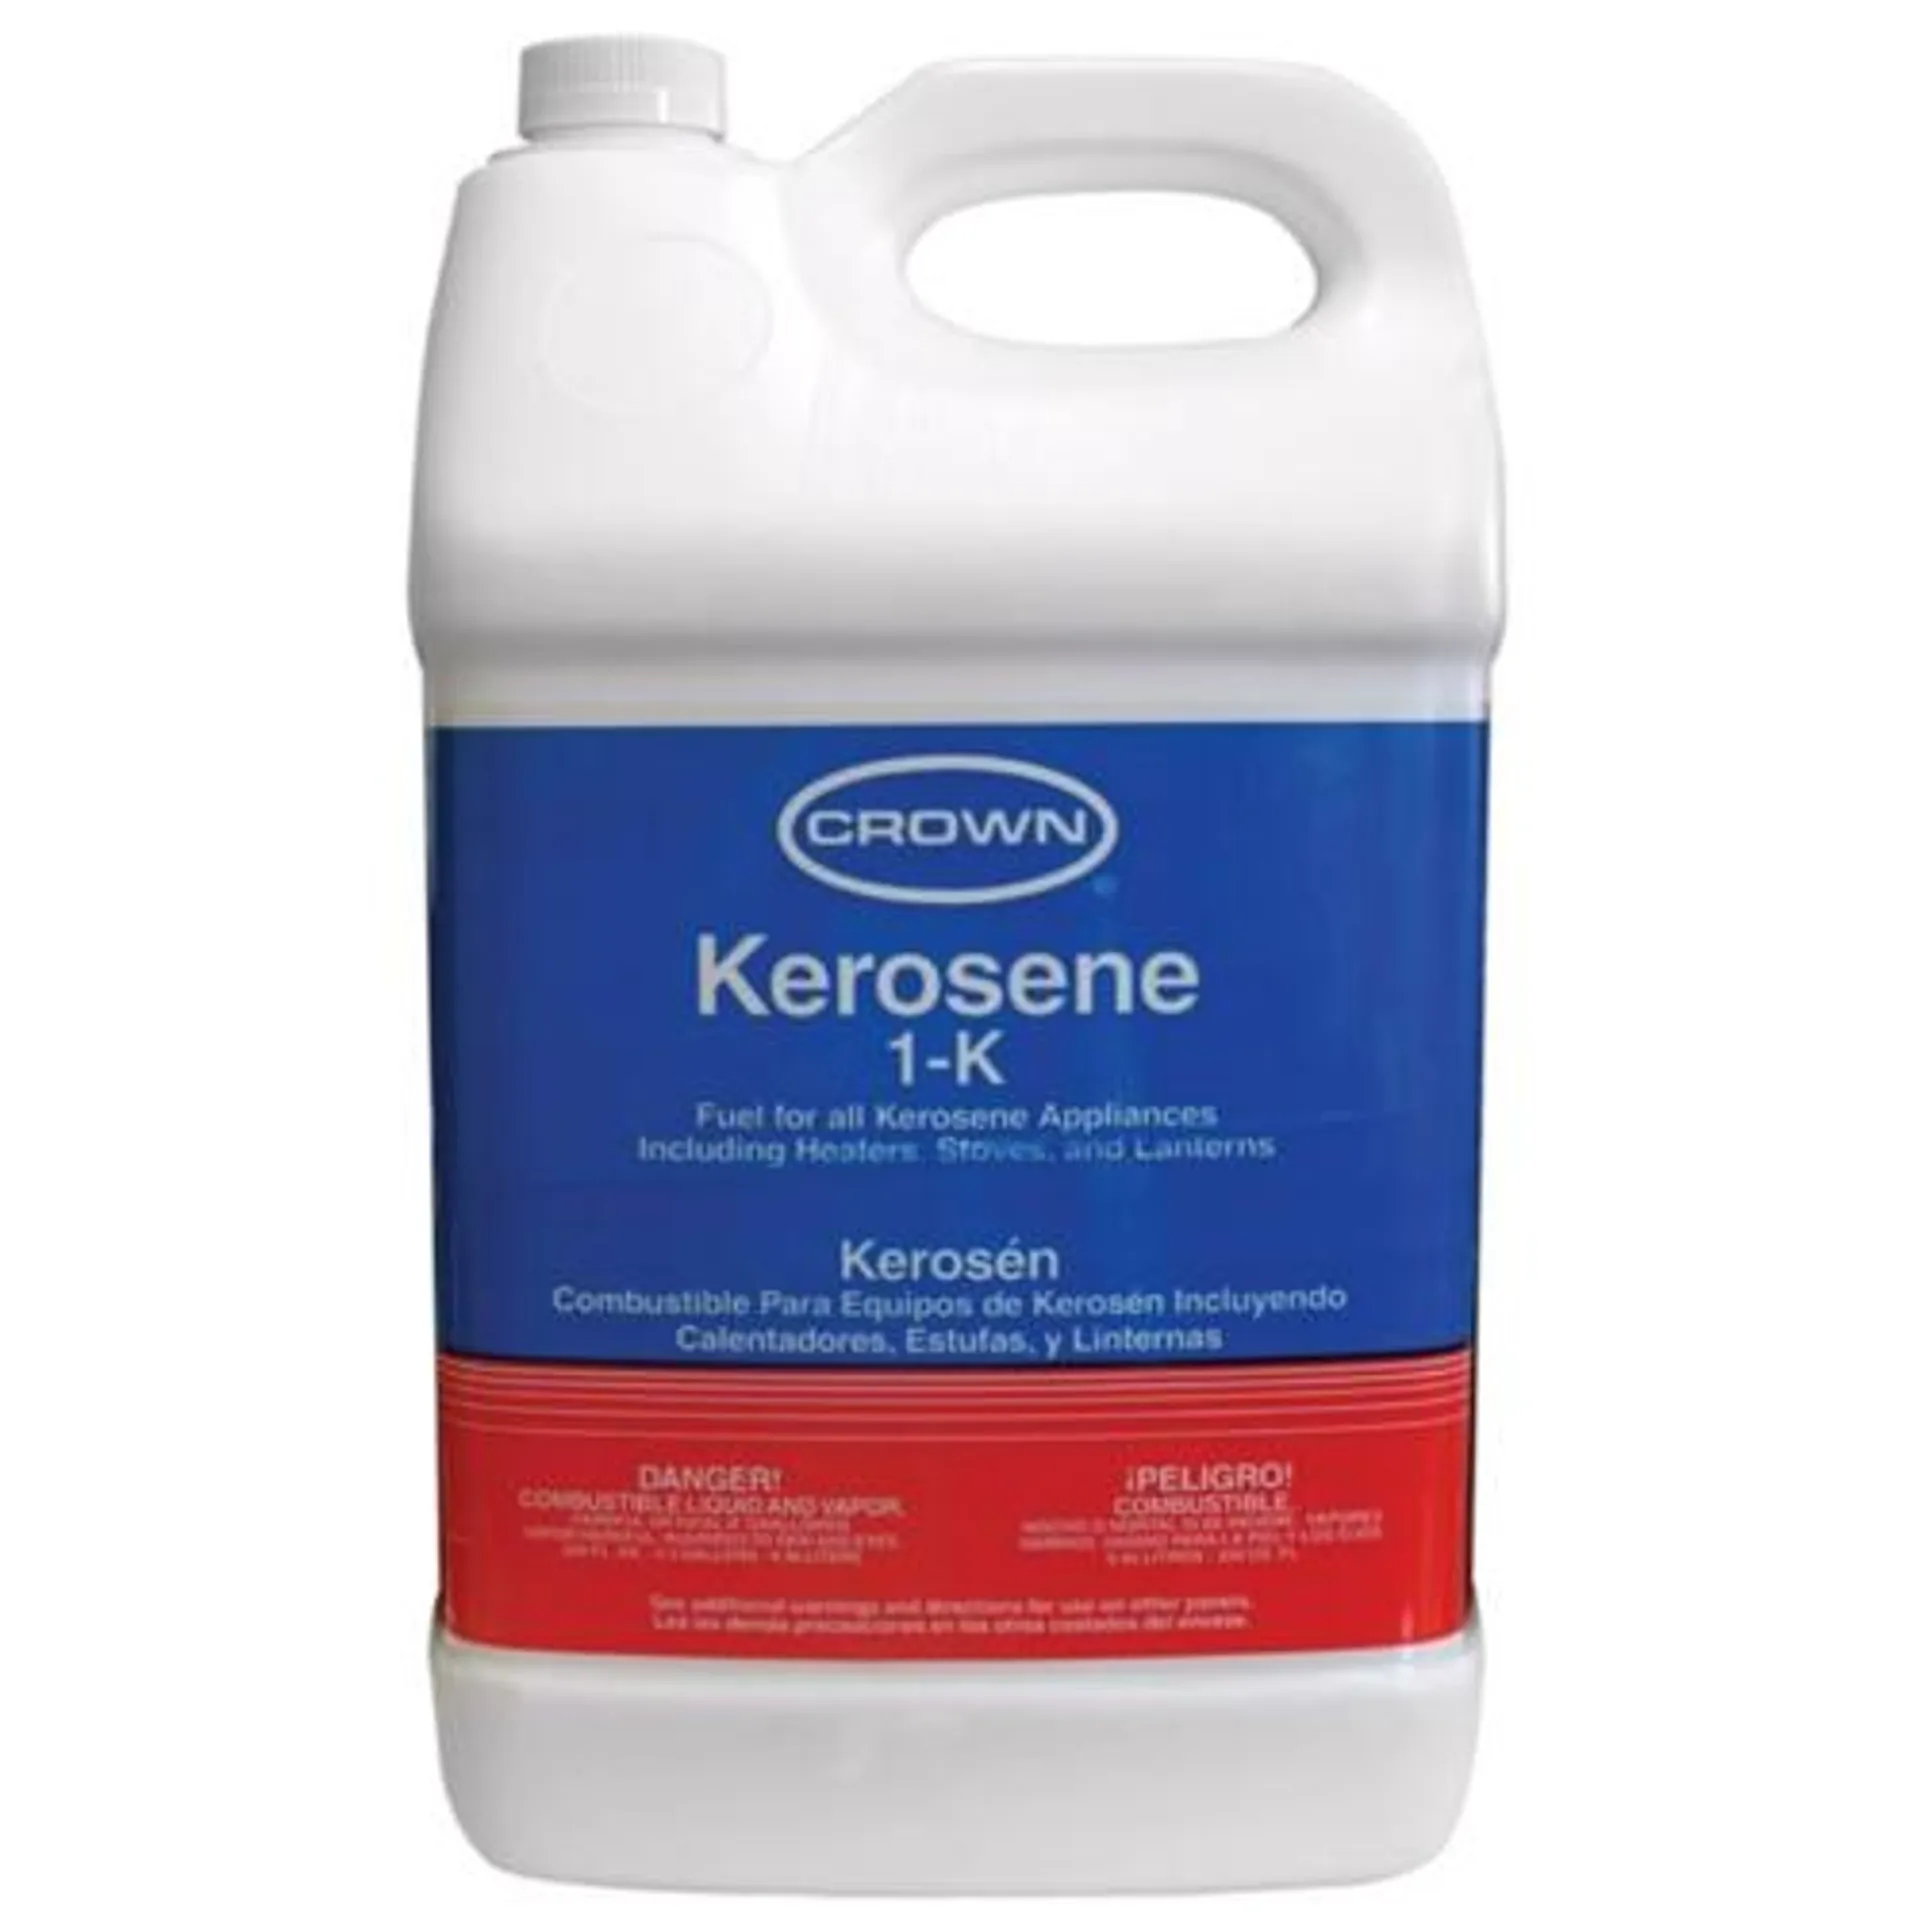 Crown 1-K Grade Kerosene